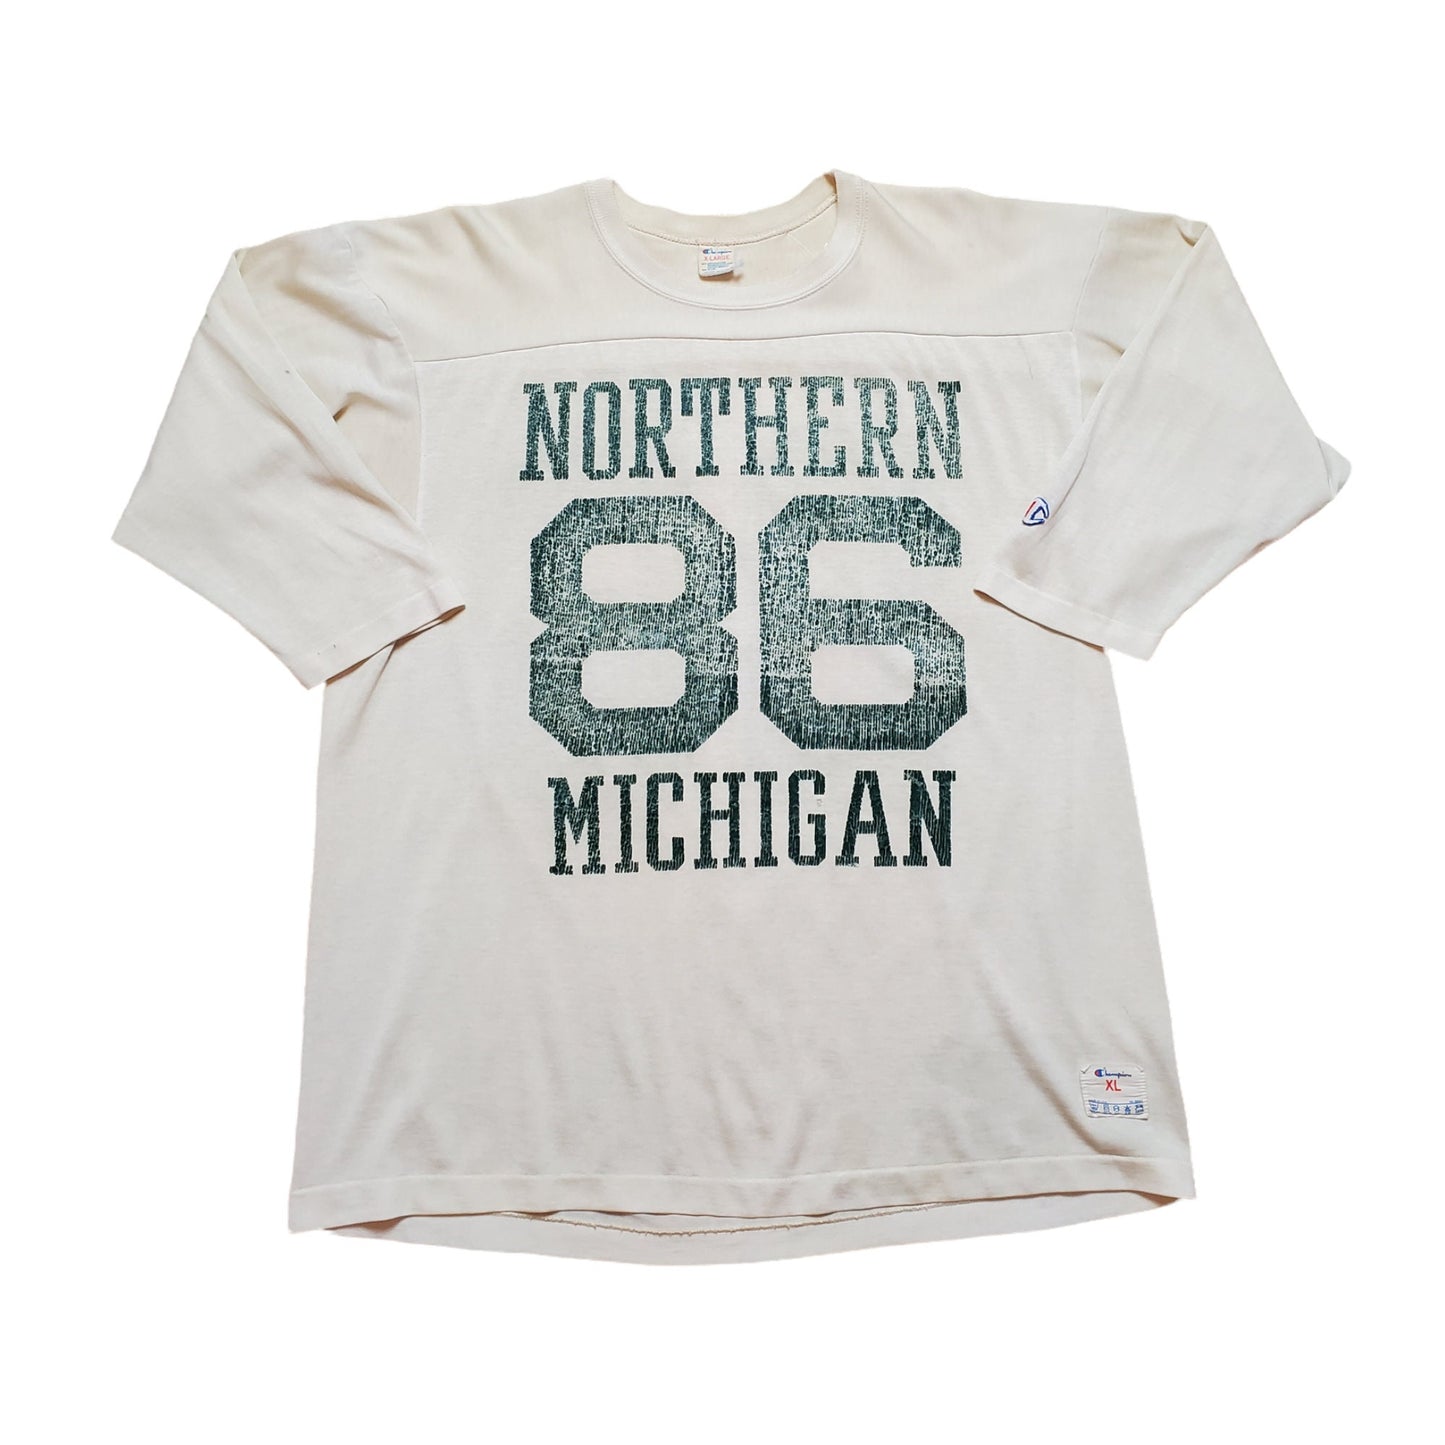 1980s Champion Northern Michigan Nylon Football Jersey Made in USA Size L